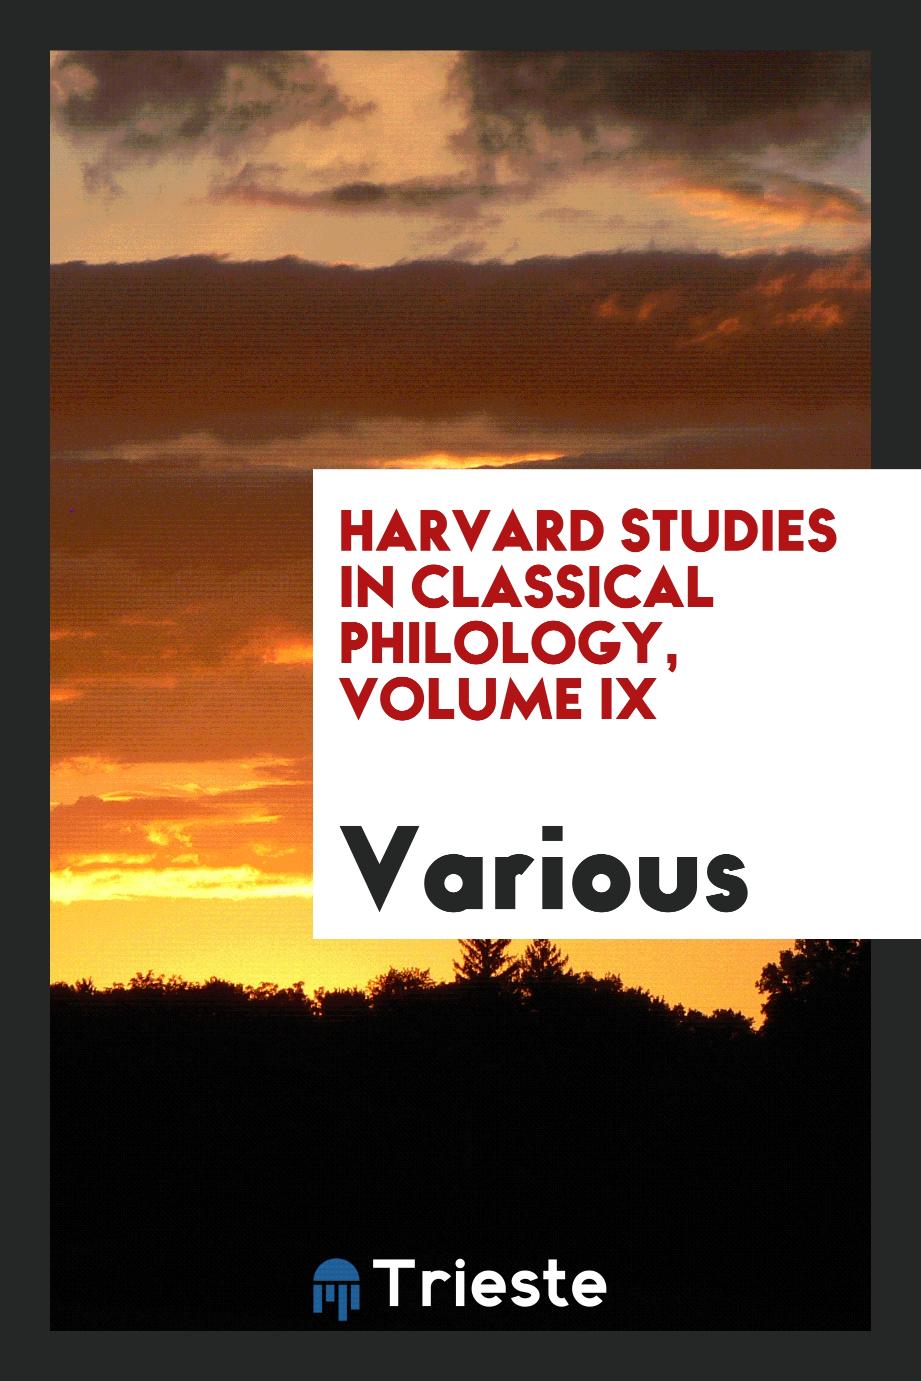 Harvard Studies in Classical Philology, Volume IX